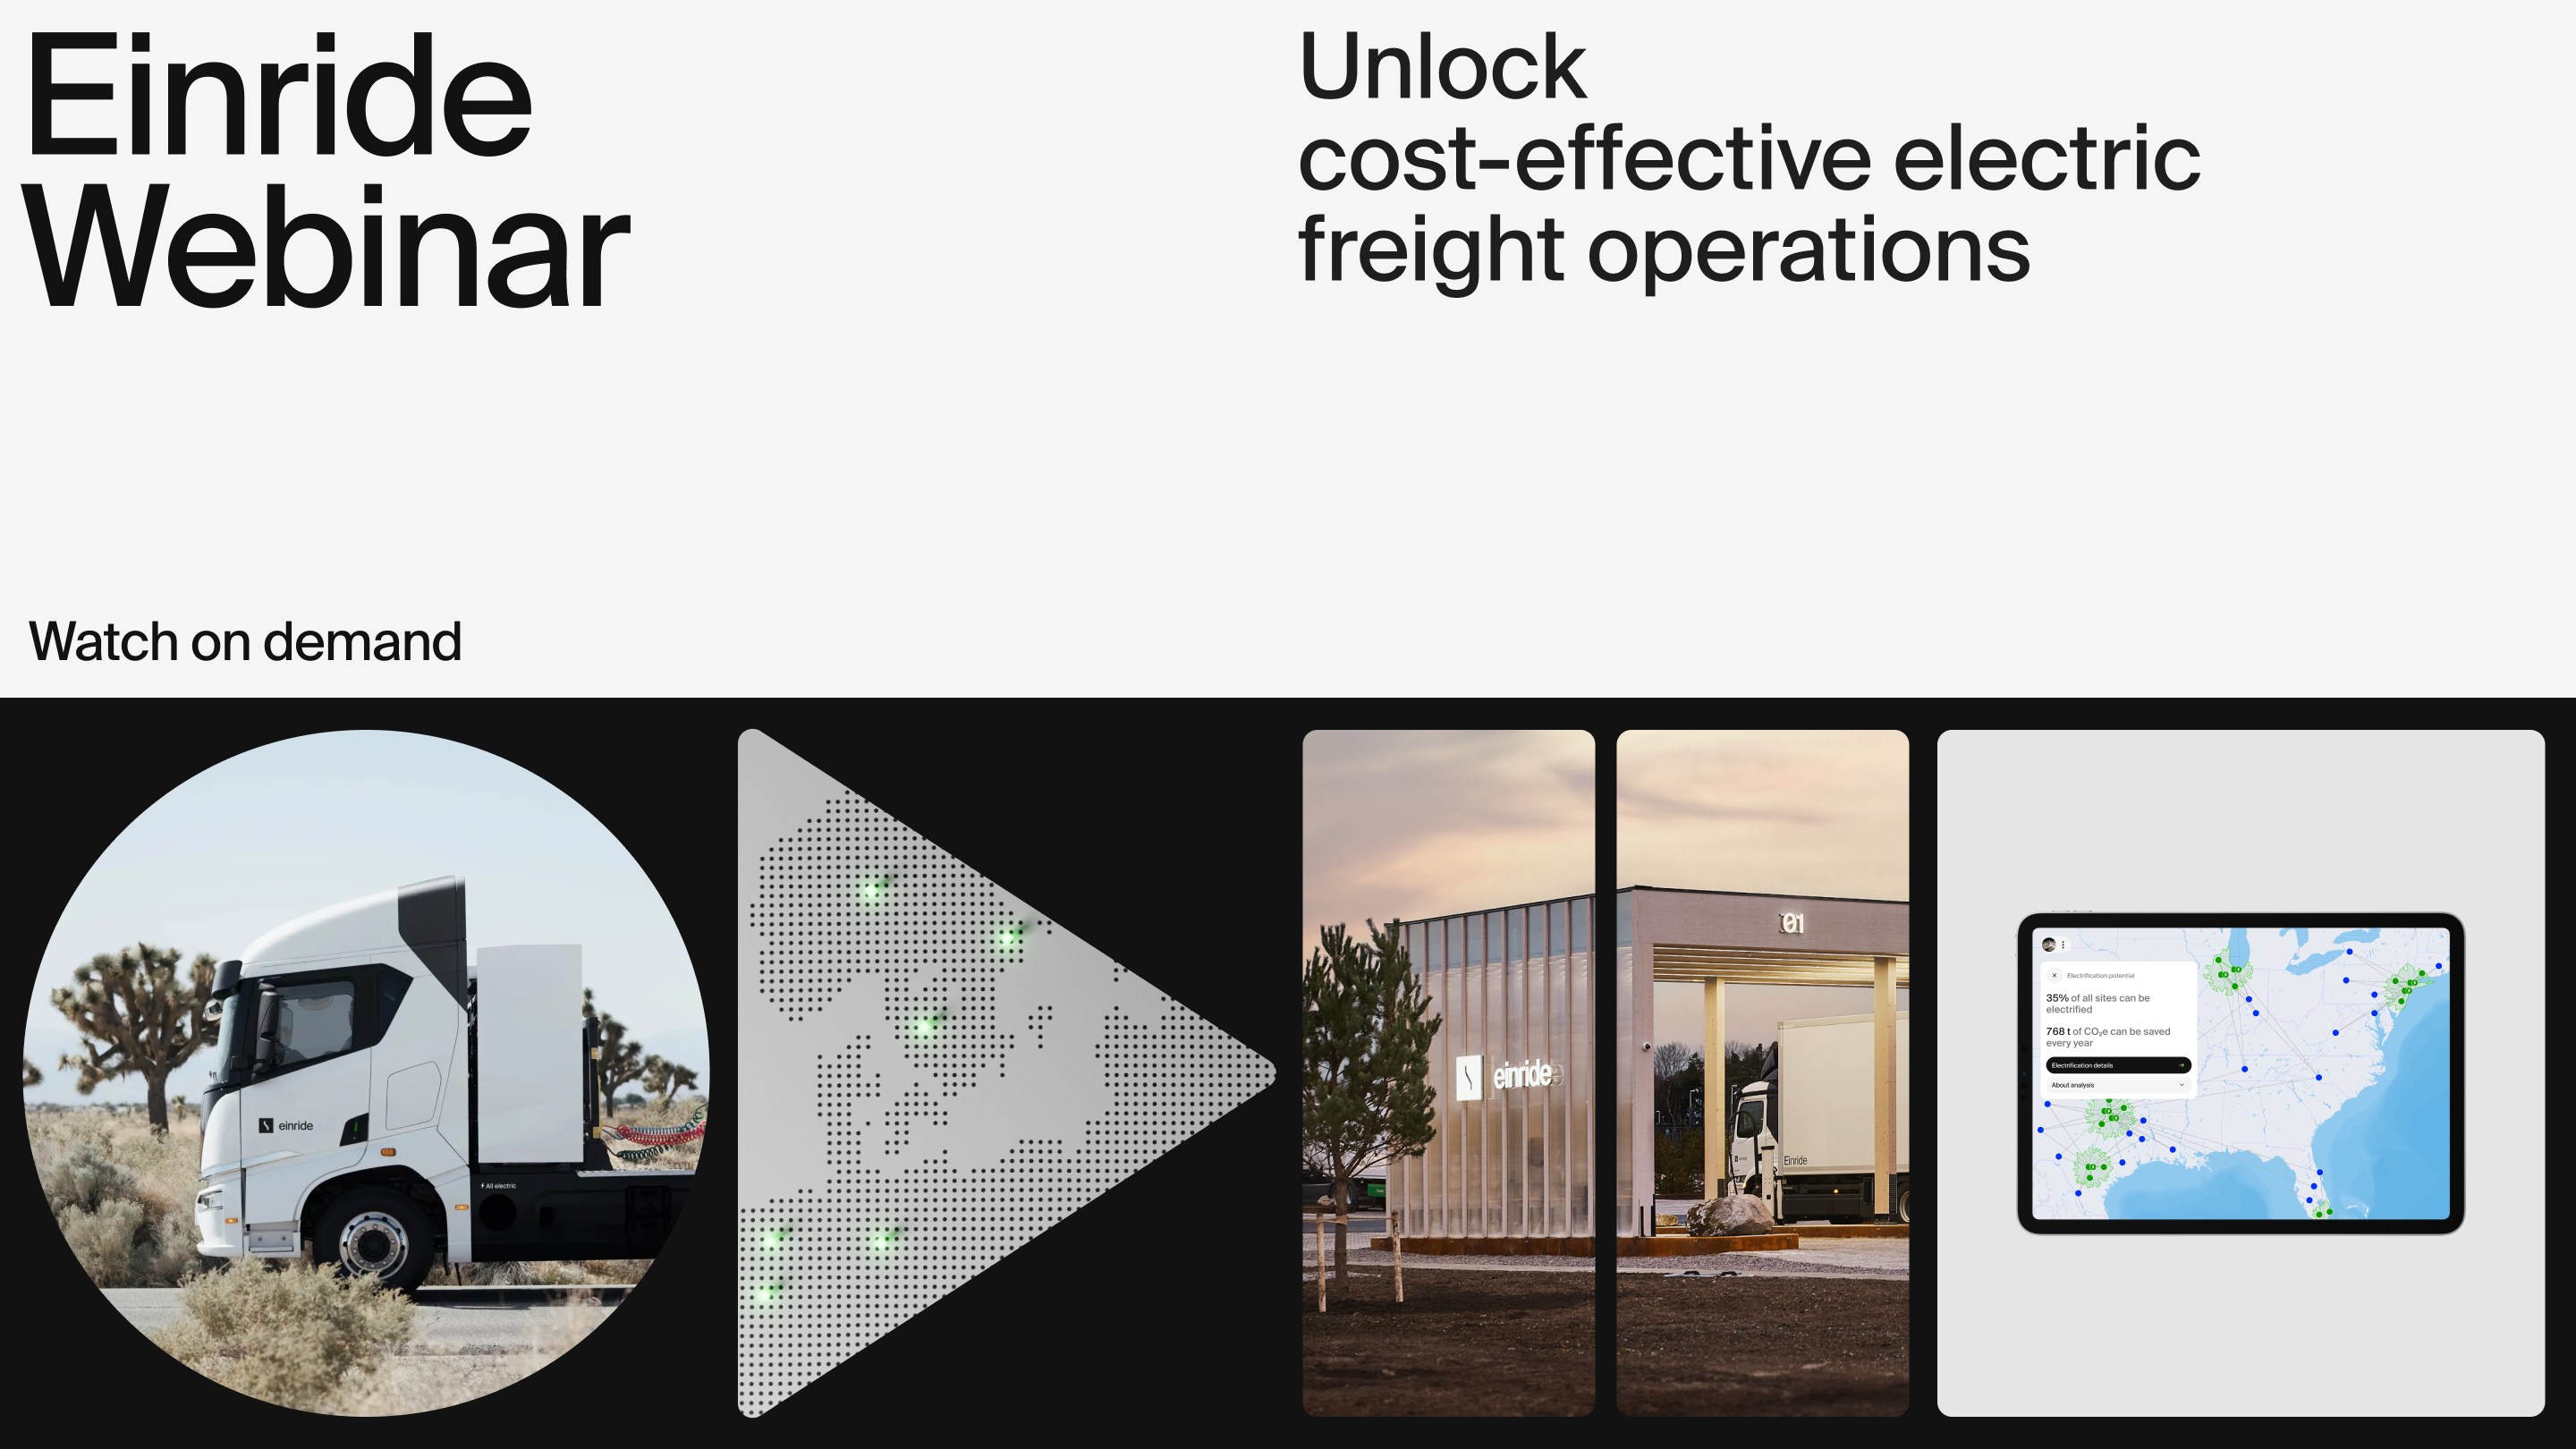 Watch Einride Webinar on demand - Unlock cost-effective electric freight operations